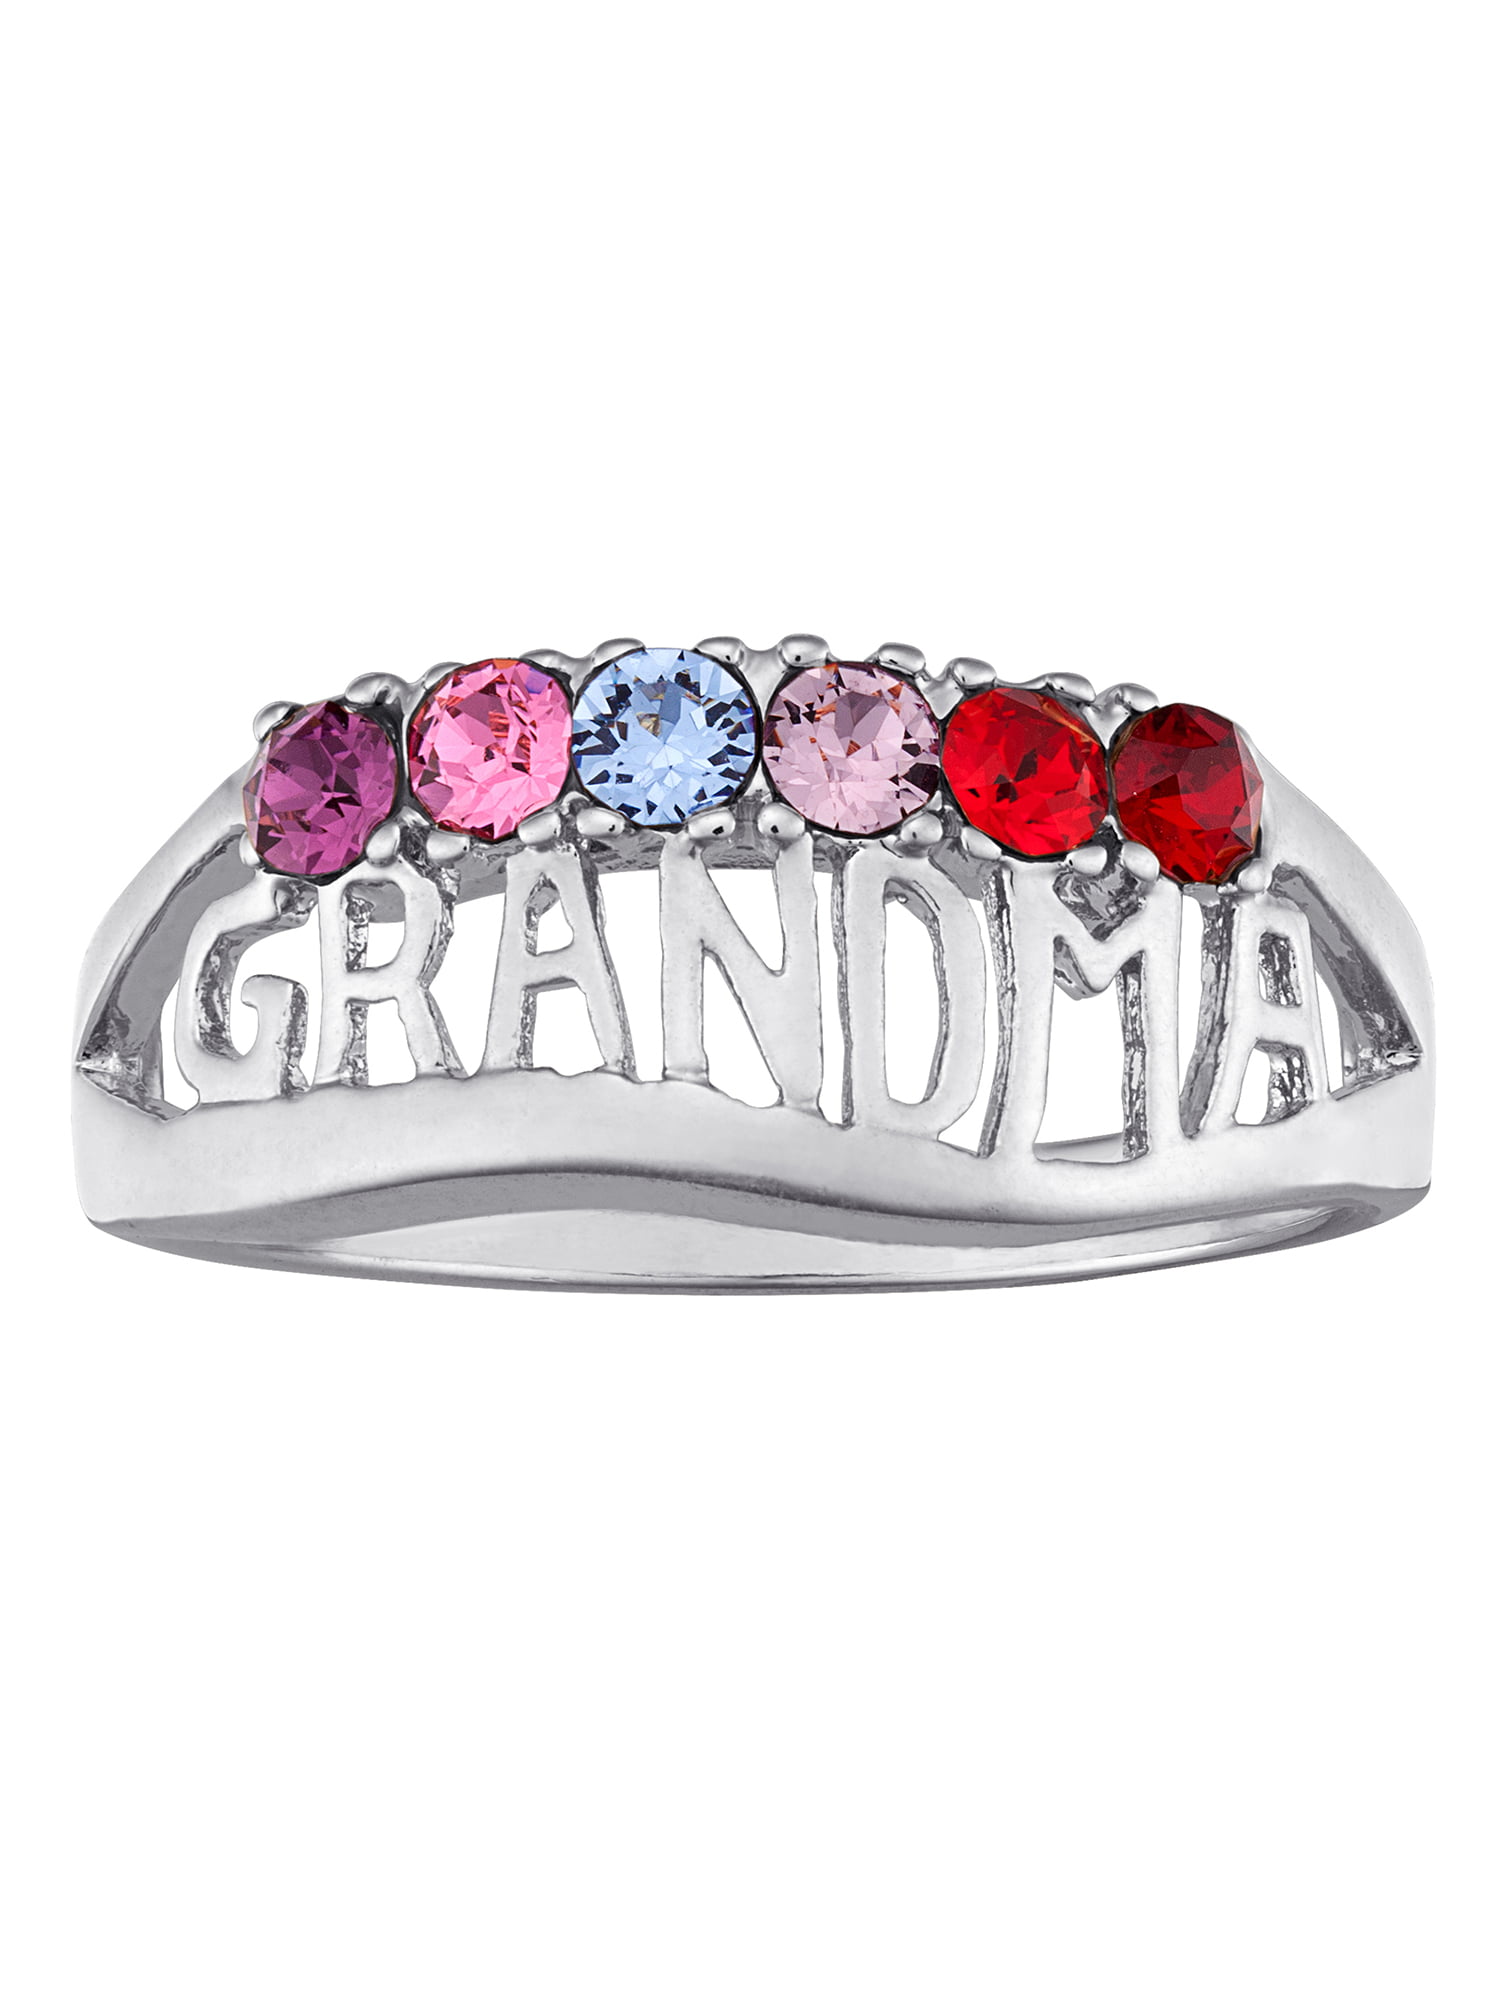 Family Jewelry Personalized "Grandma" Birthstone SilverTone or 14kt